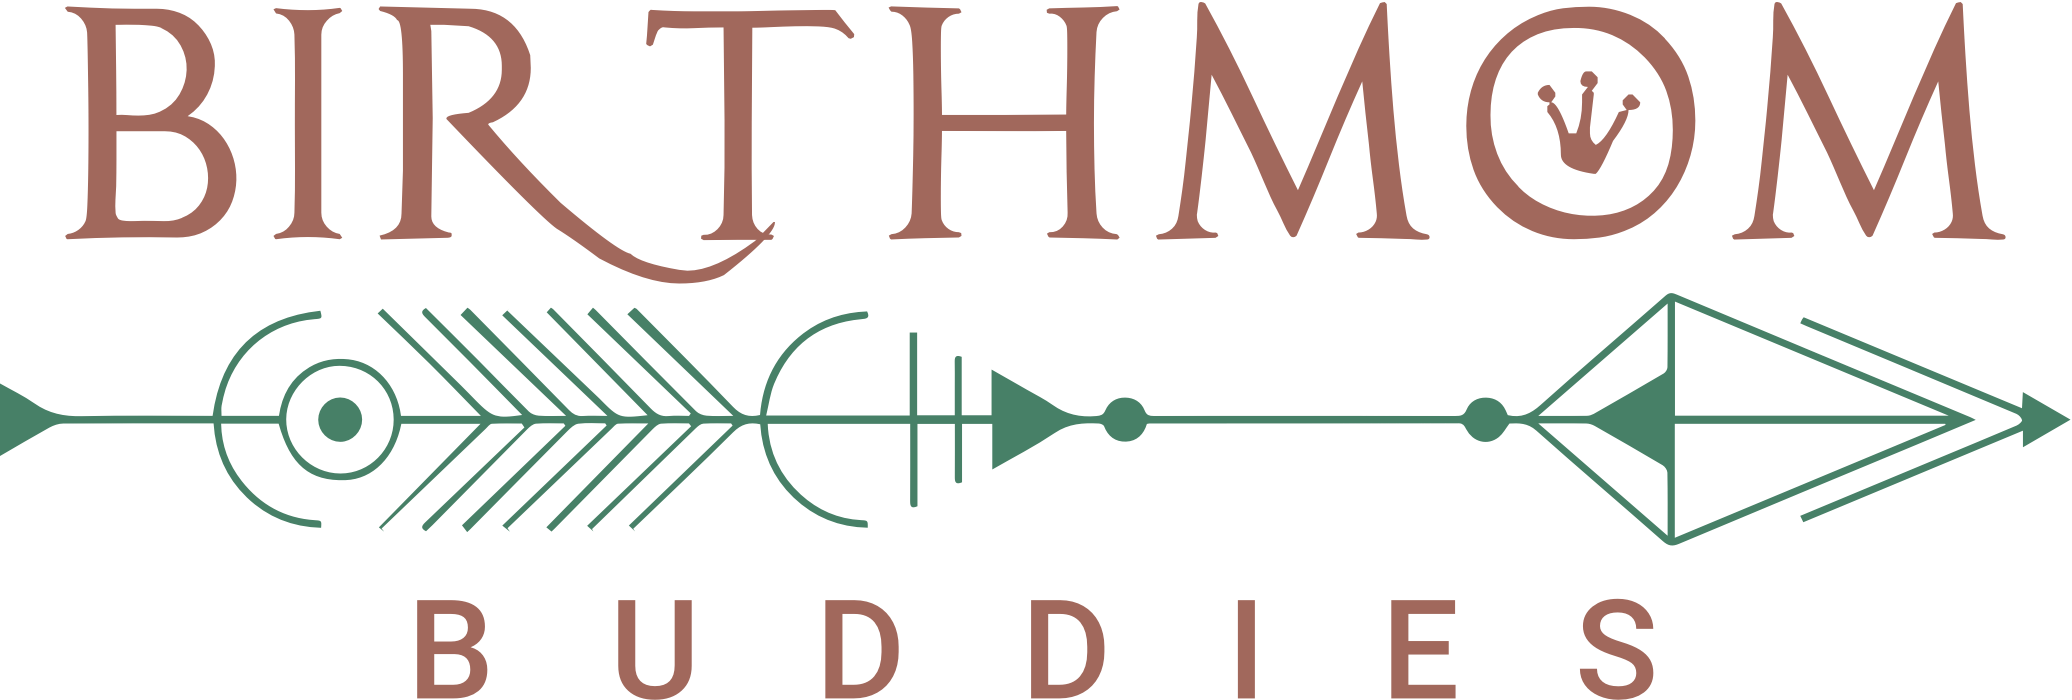 The Birthmom Buddies logo, with the word Birthmom above an arrow and the word Buddies below it.